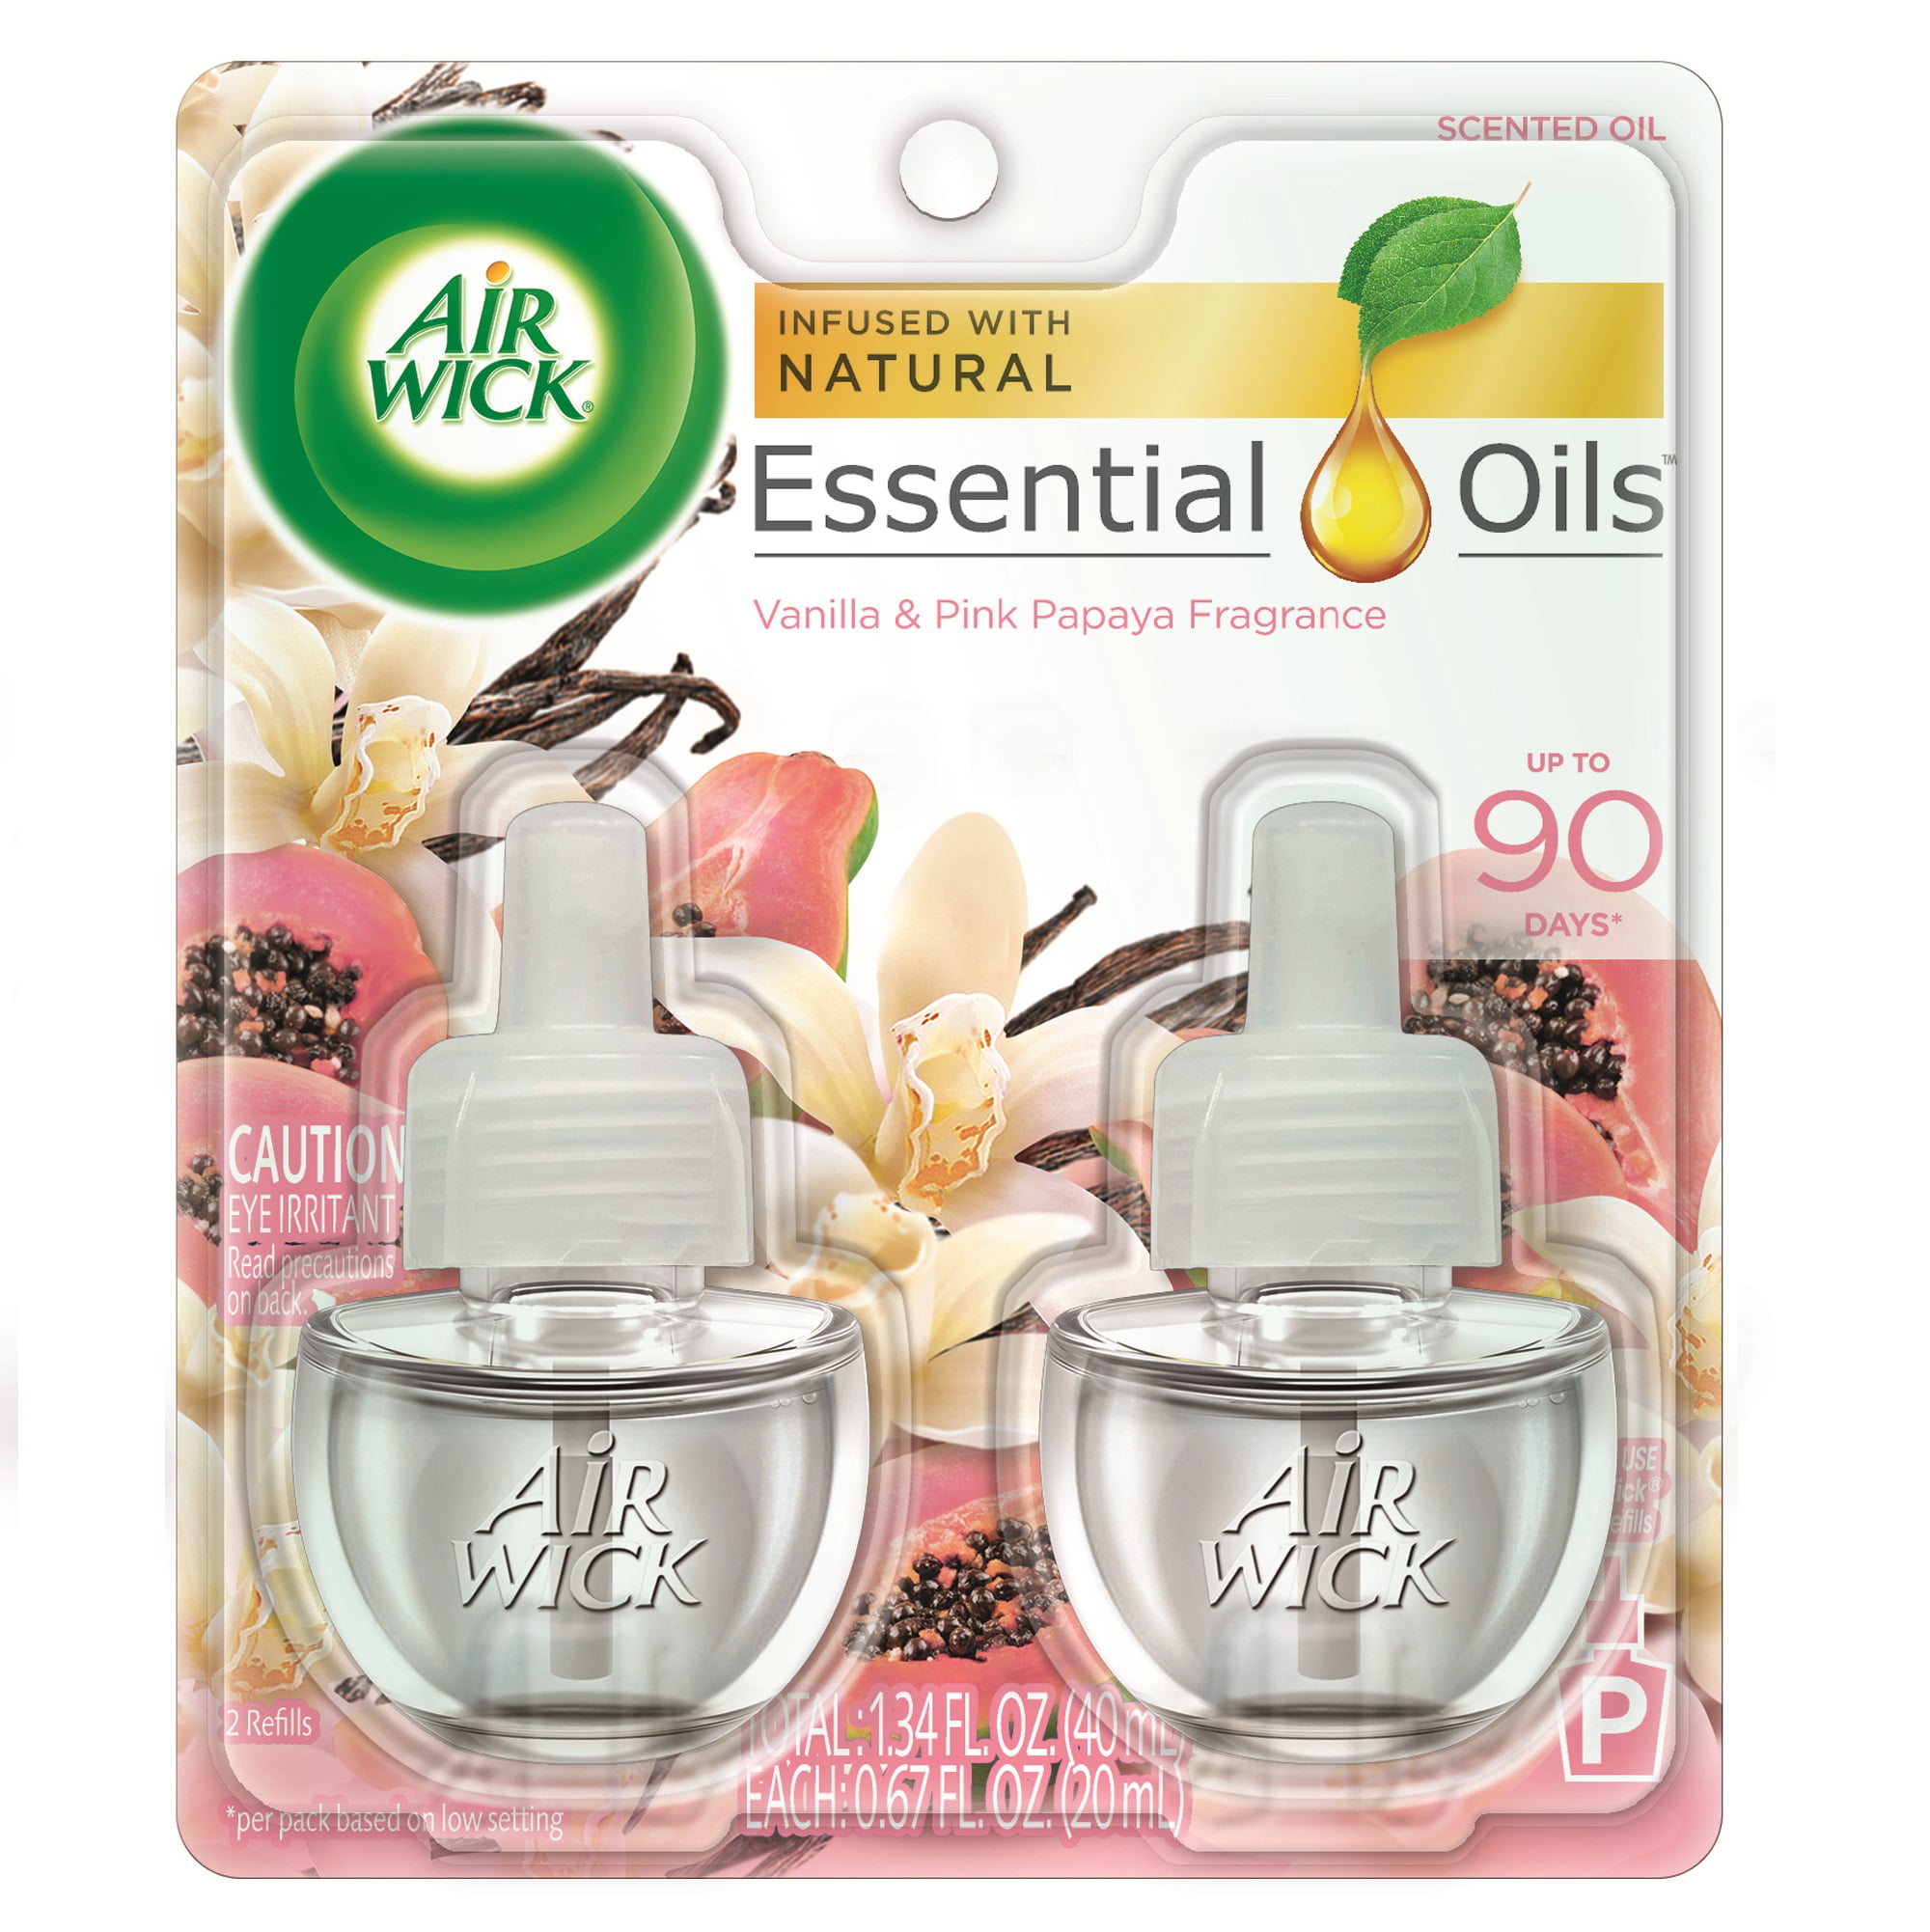 Air Wick Essential Mist - Lush Honeysuckle And Raspberry Starter Kit - 2ct  : Target